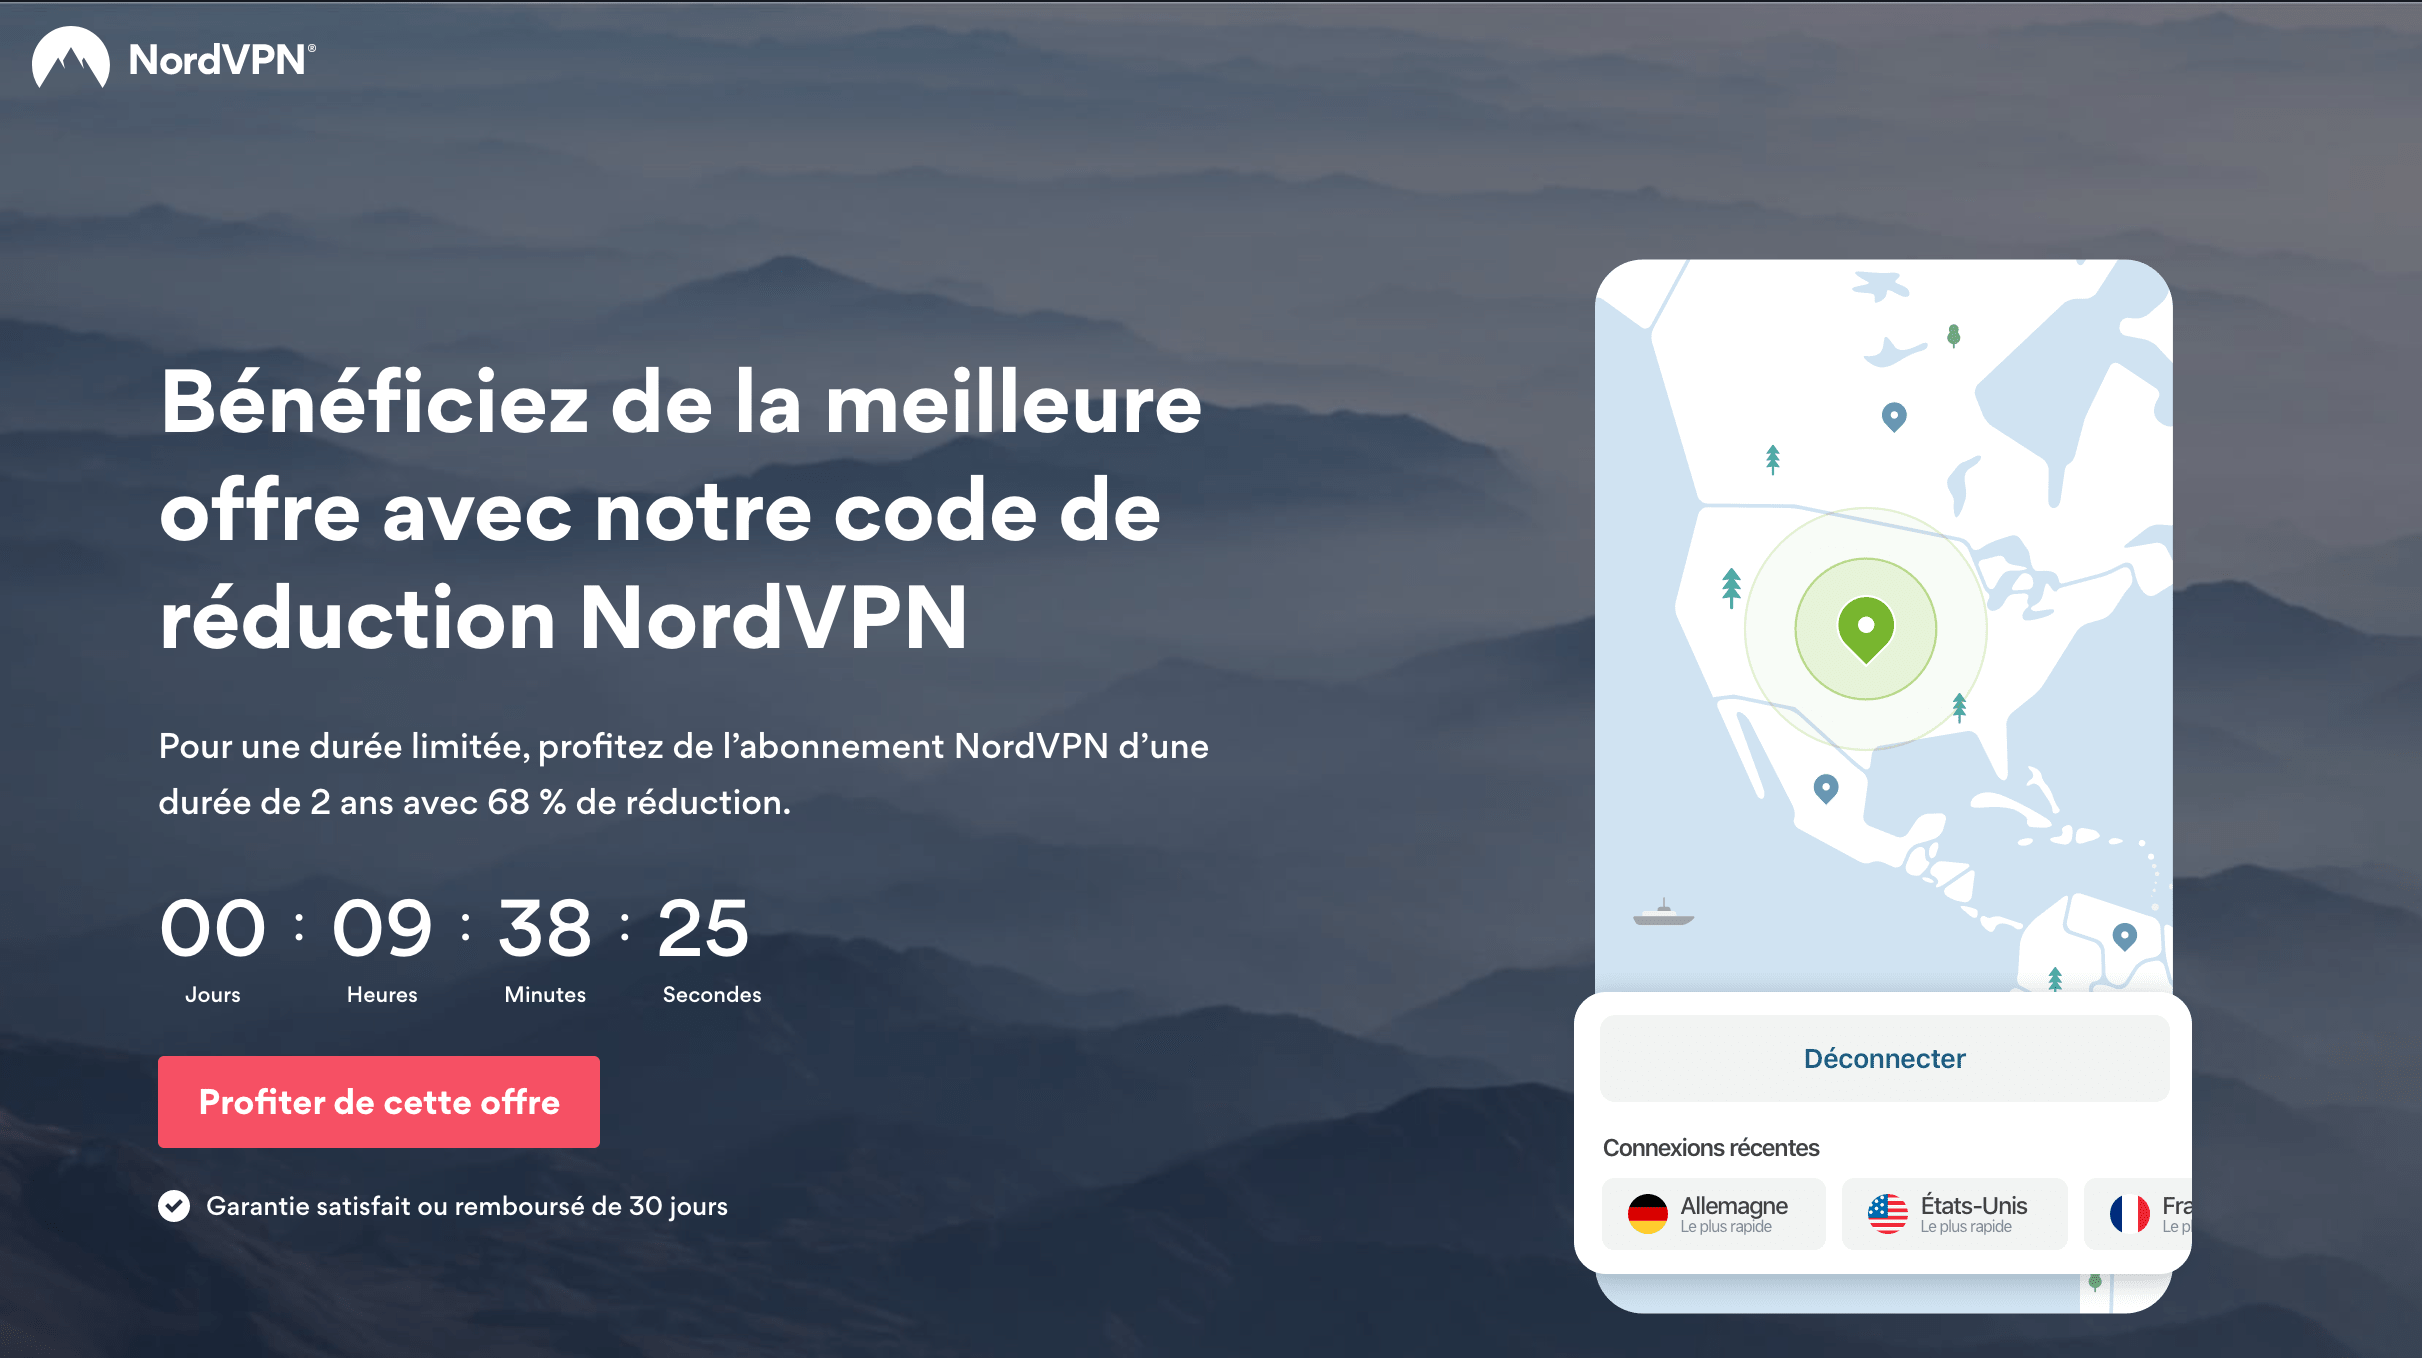 NordVPN à -68% avec le code promo tipsfromgeeks.